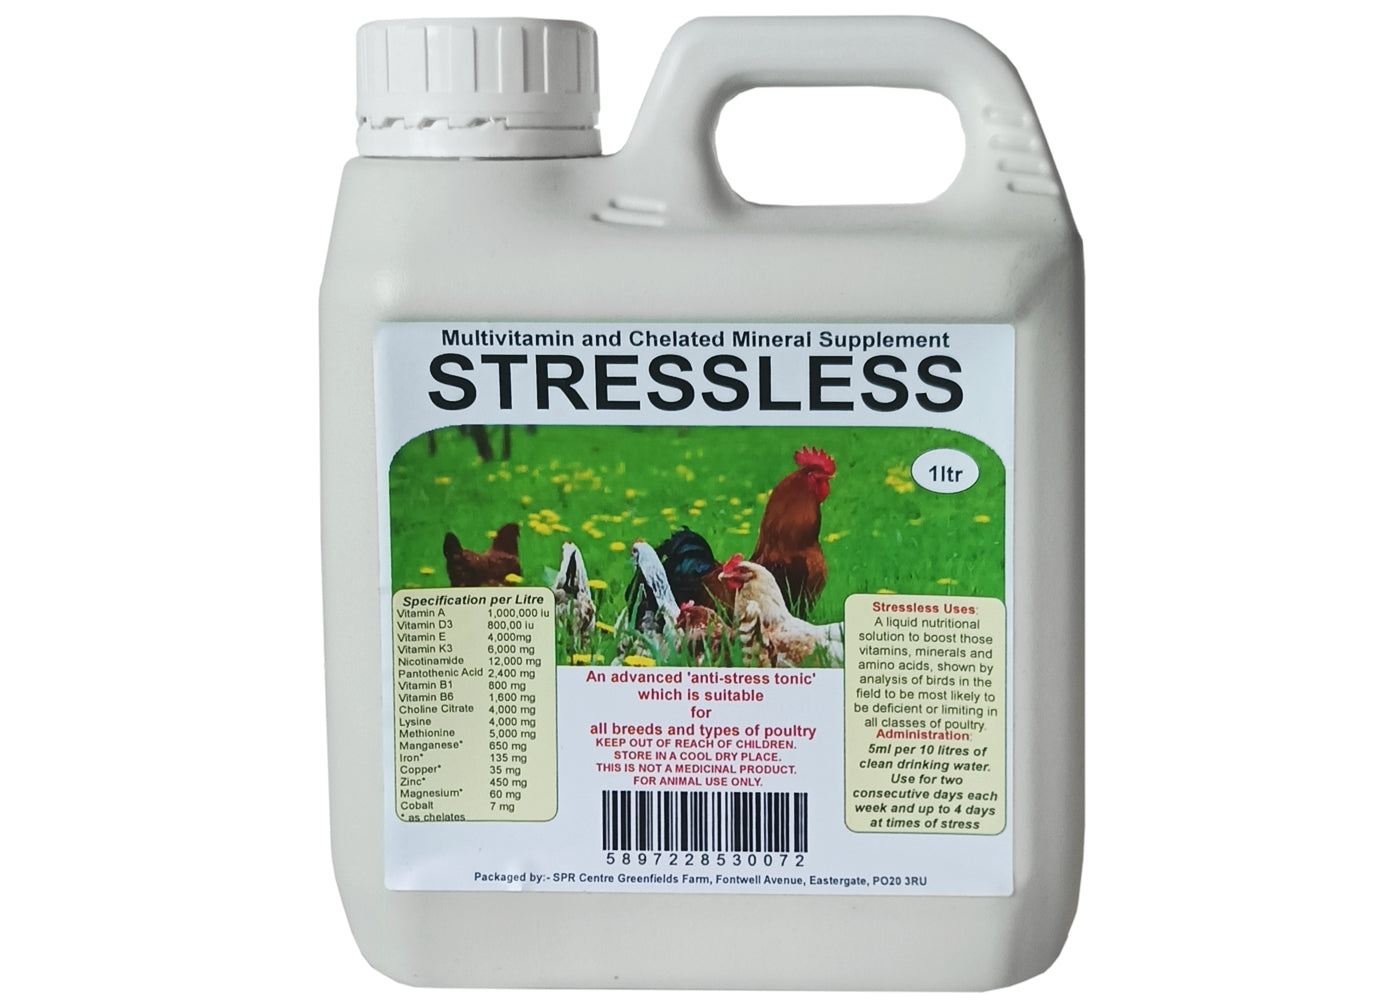 Stressless Poultry Tonic | Anti-Stress Chicken Supplement - Buy Online SPR Centre UK